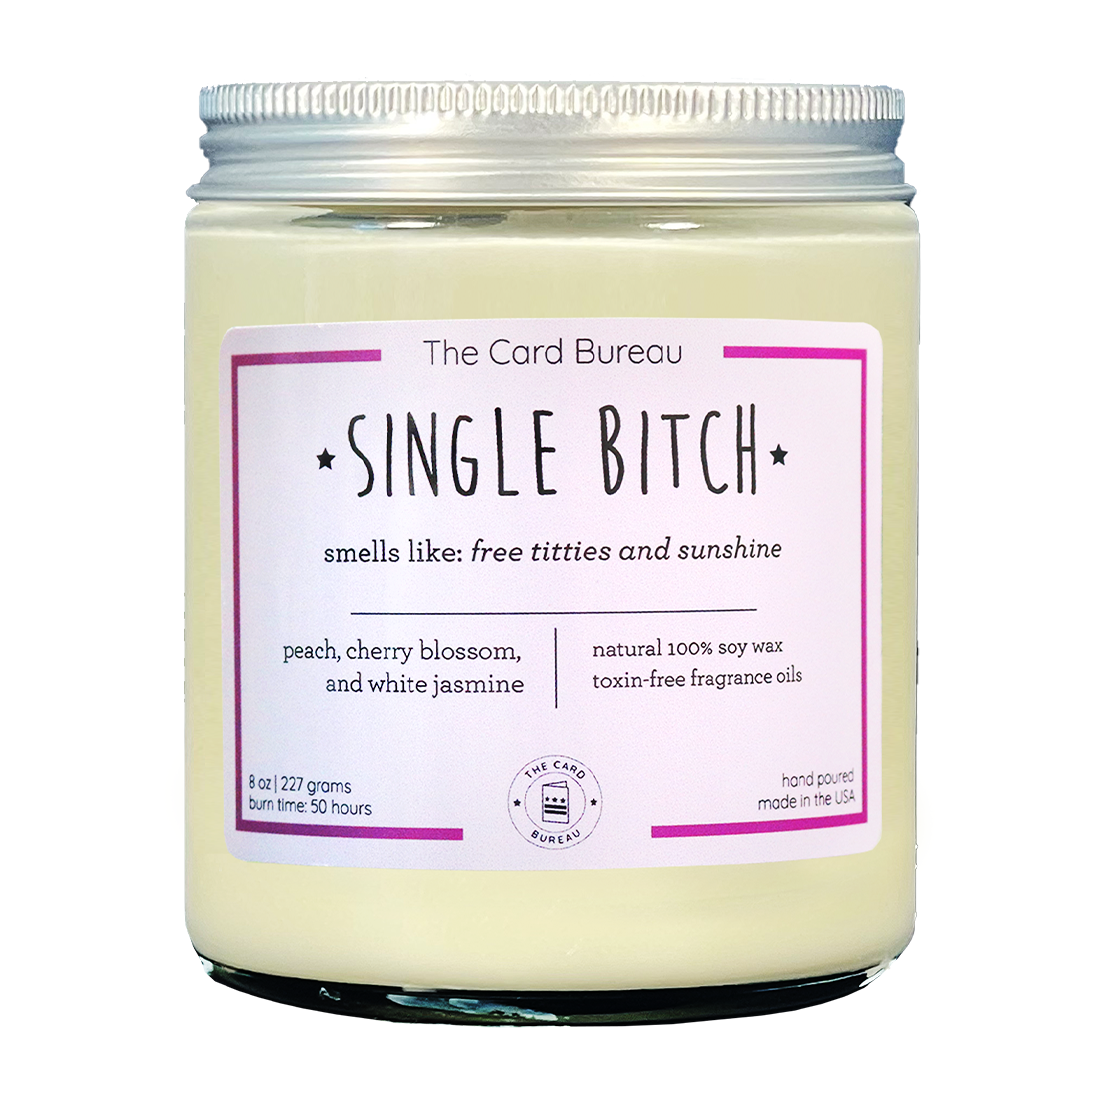 Single Bitch Feminist Candle 8 oz Home Goods The Card Bureau   